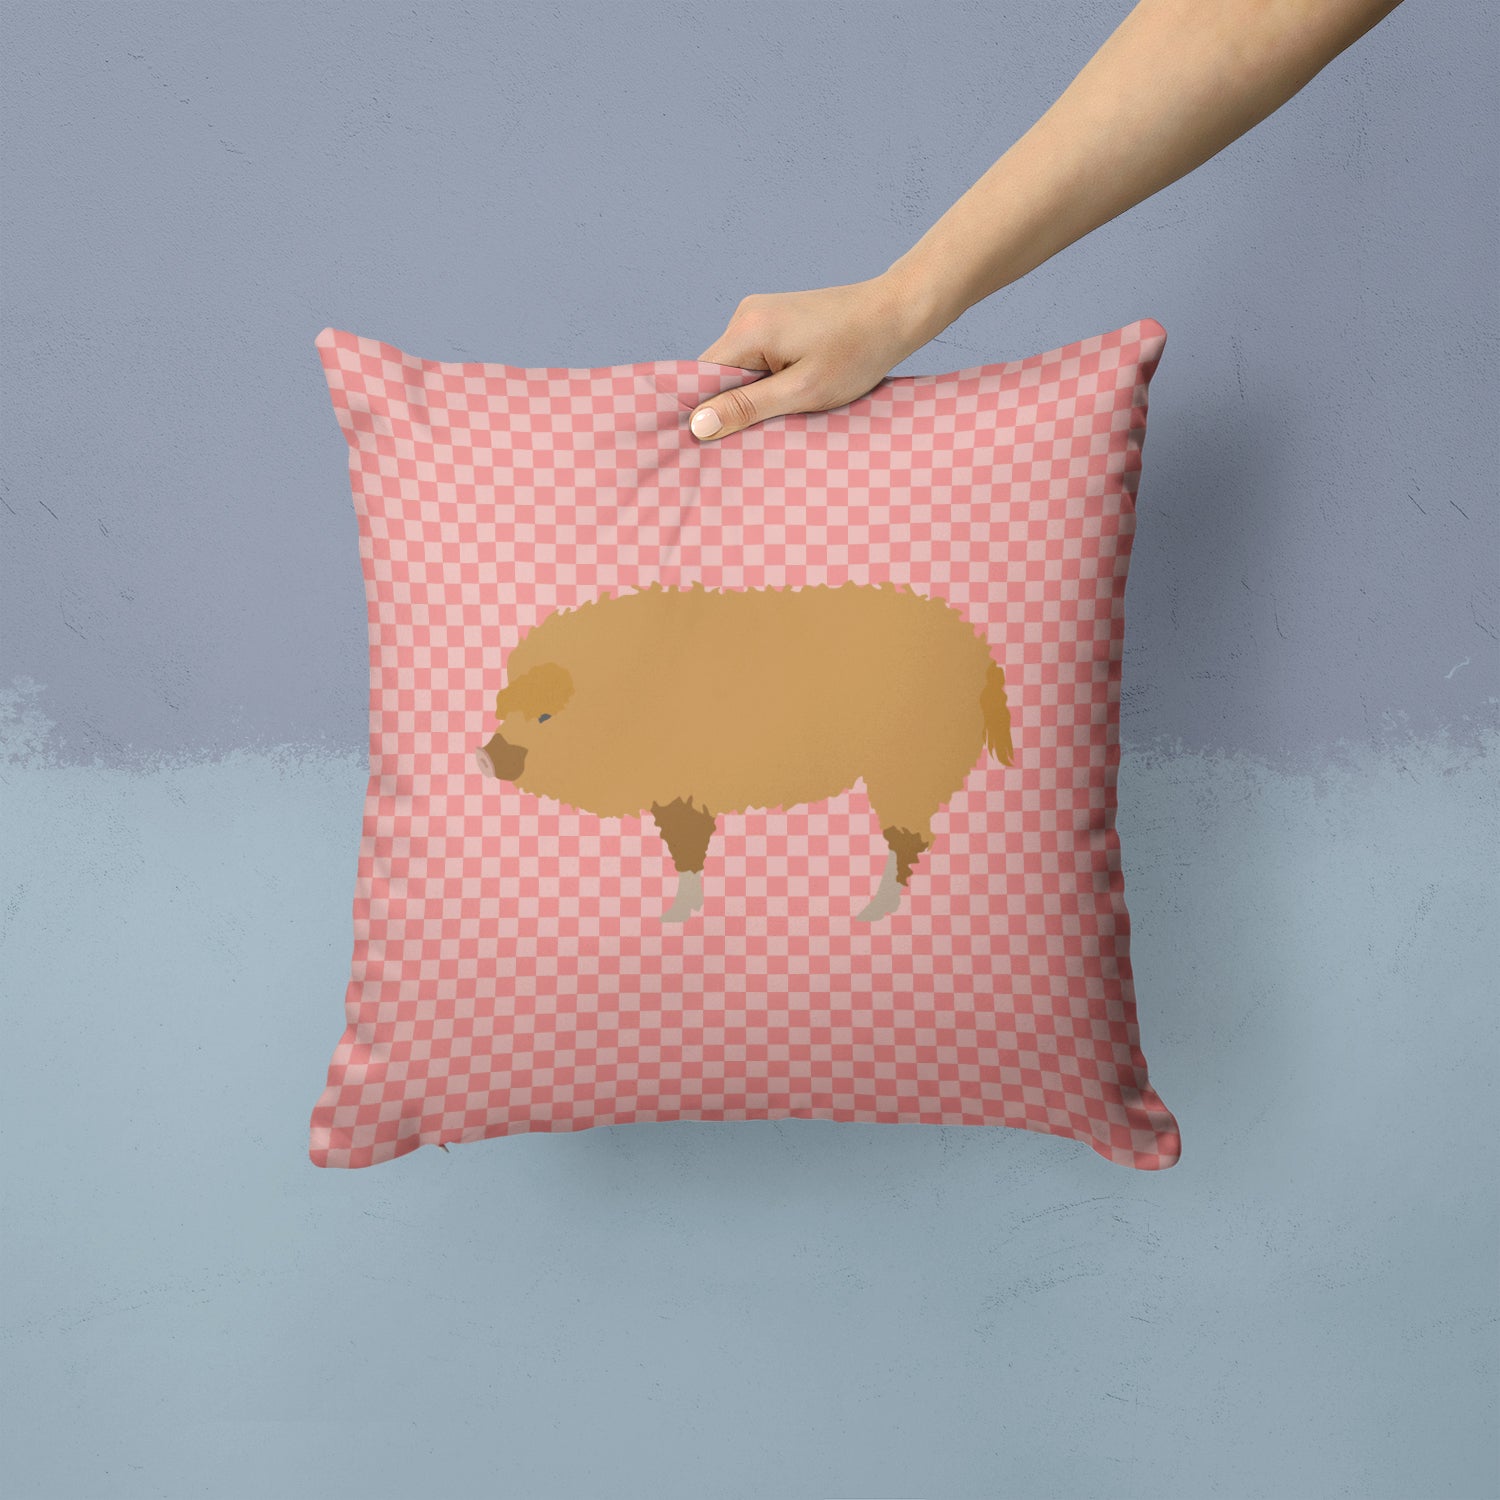 Hungarian Mangalica Pig Pink Check Fabric Decorative Pillow BB7934PW1414 - the-store.com